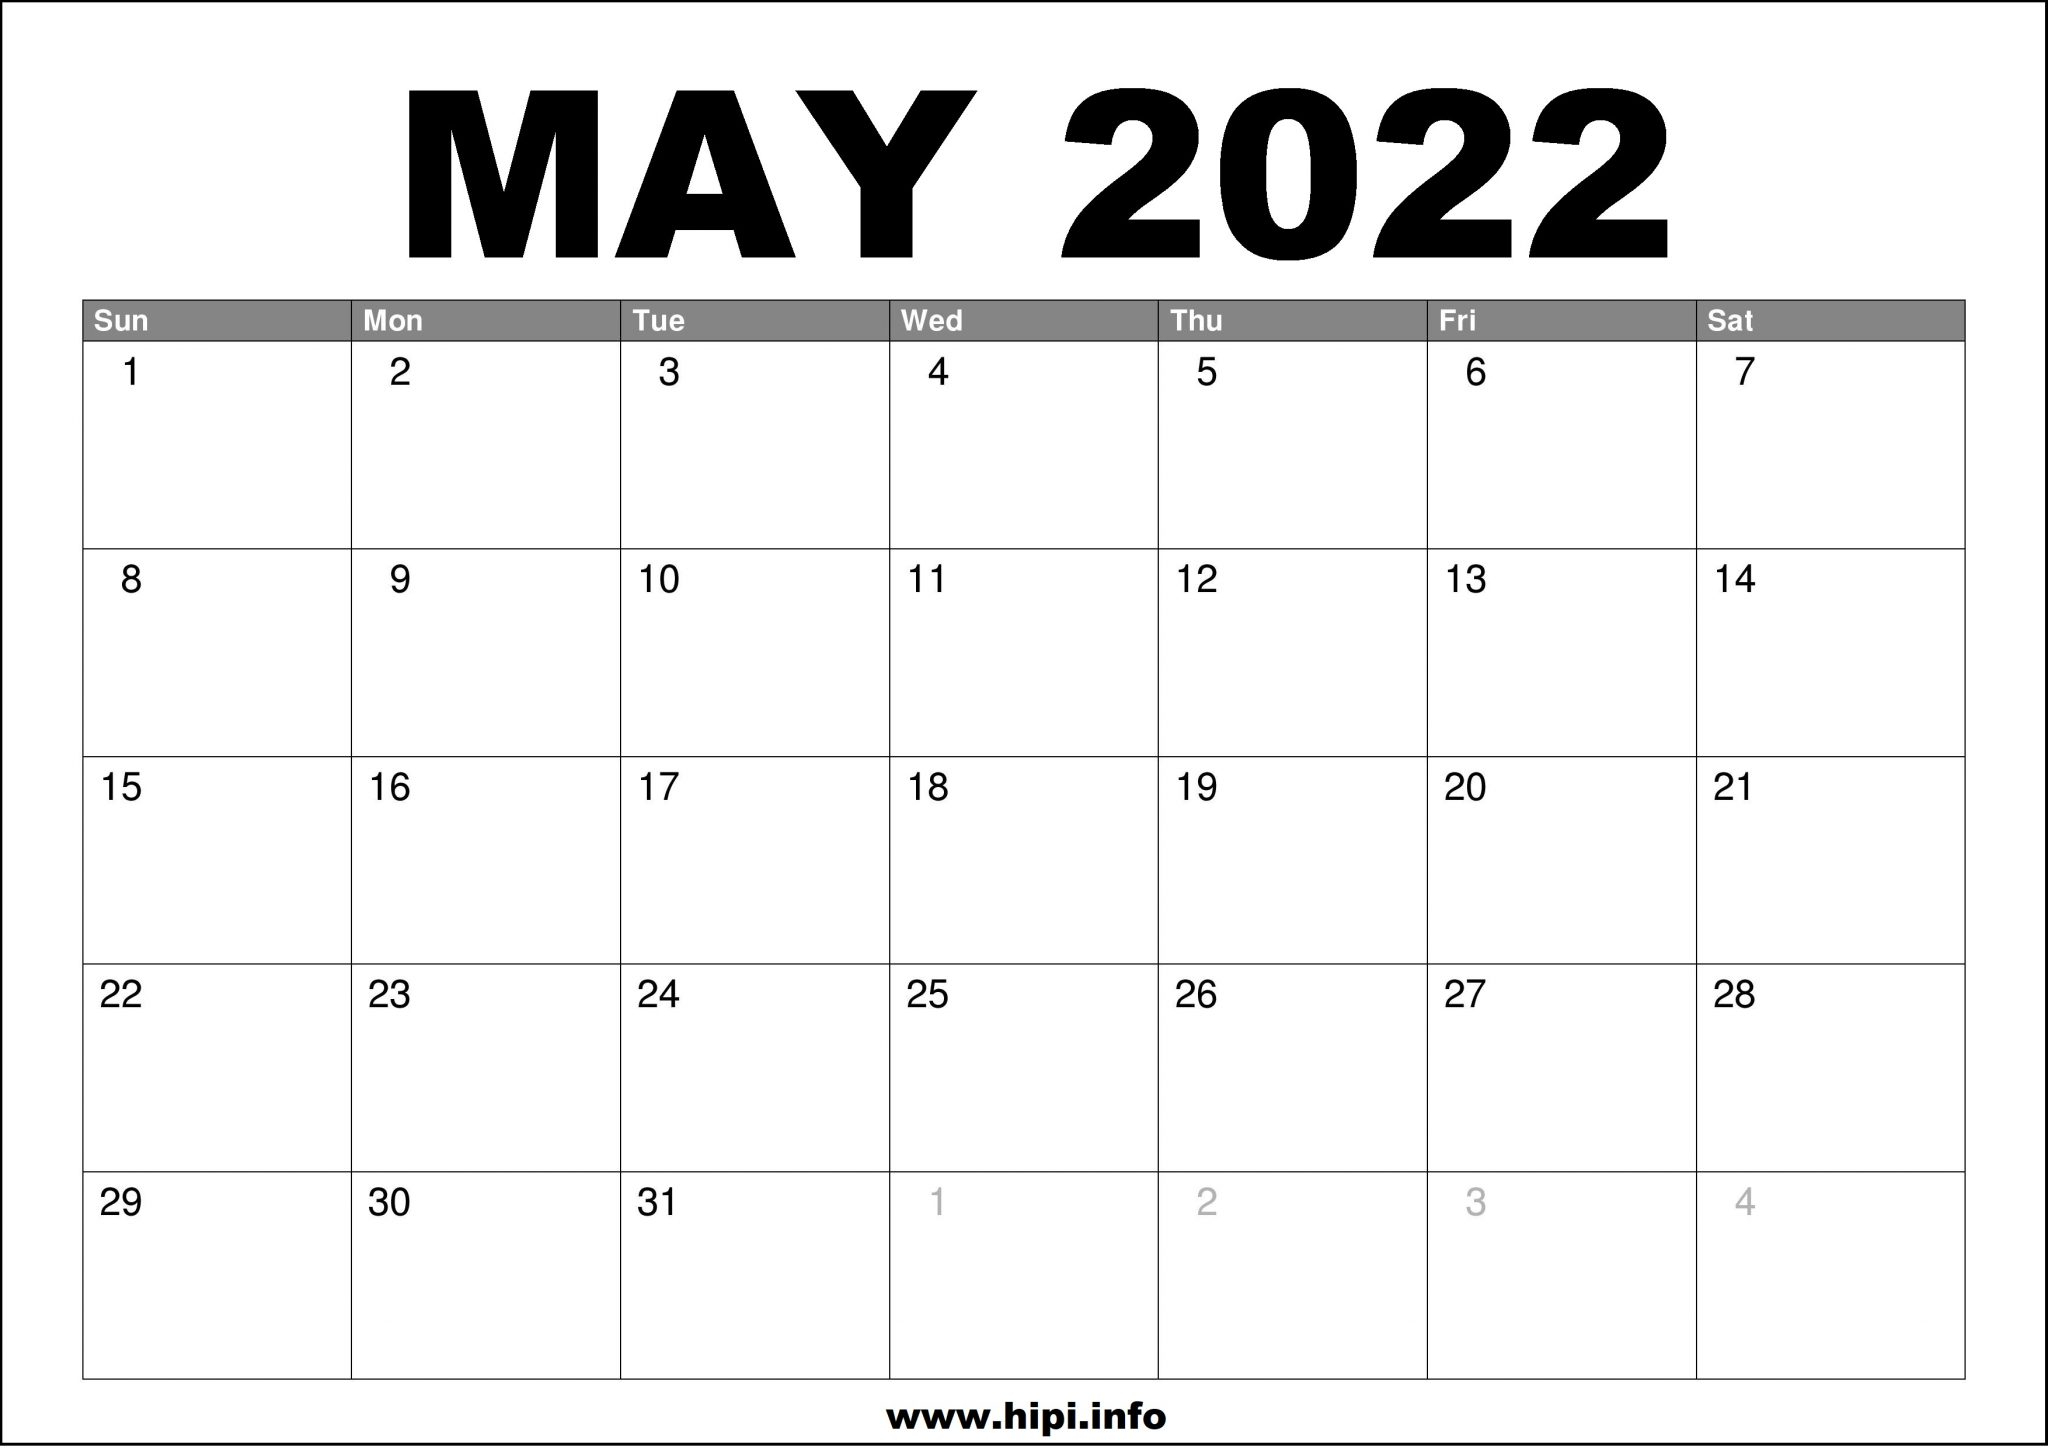 May 2022 Calendar Printable Free - Hipi | Calendars Printable Free